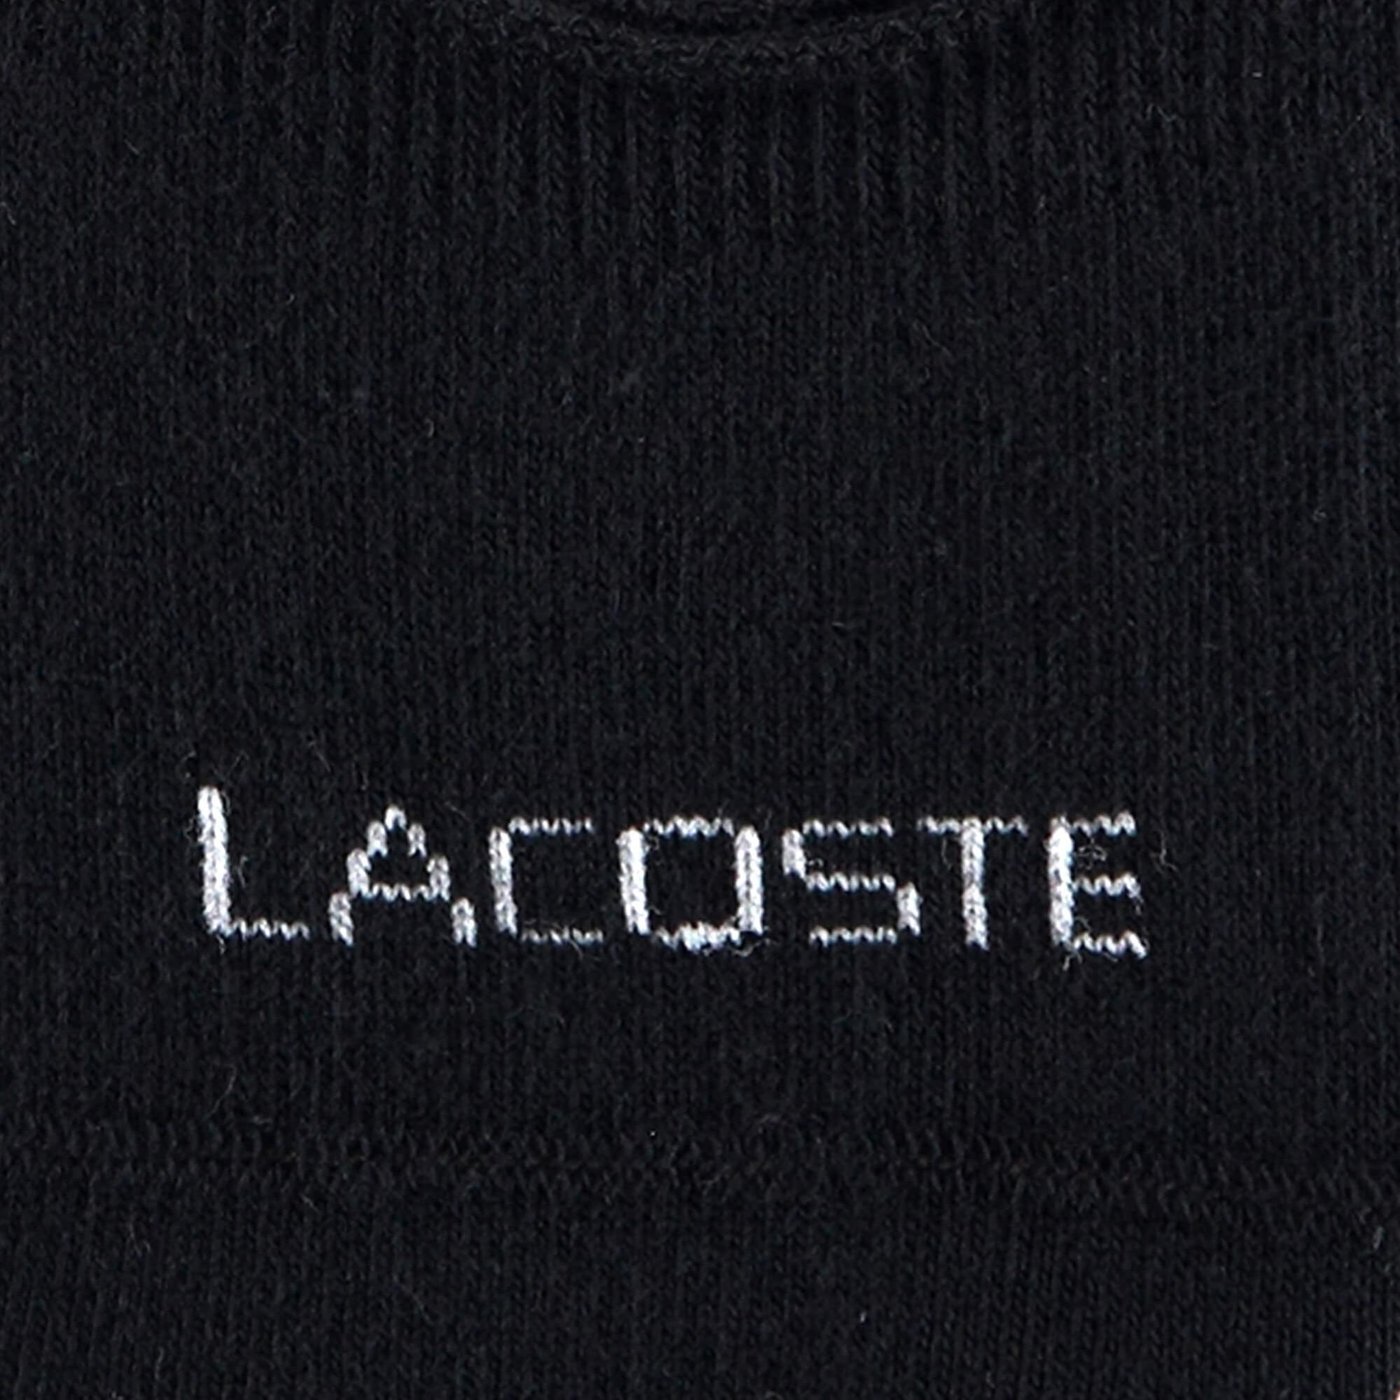 Шкарпетки унісекс Lacoste